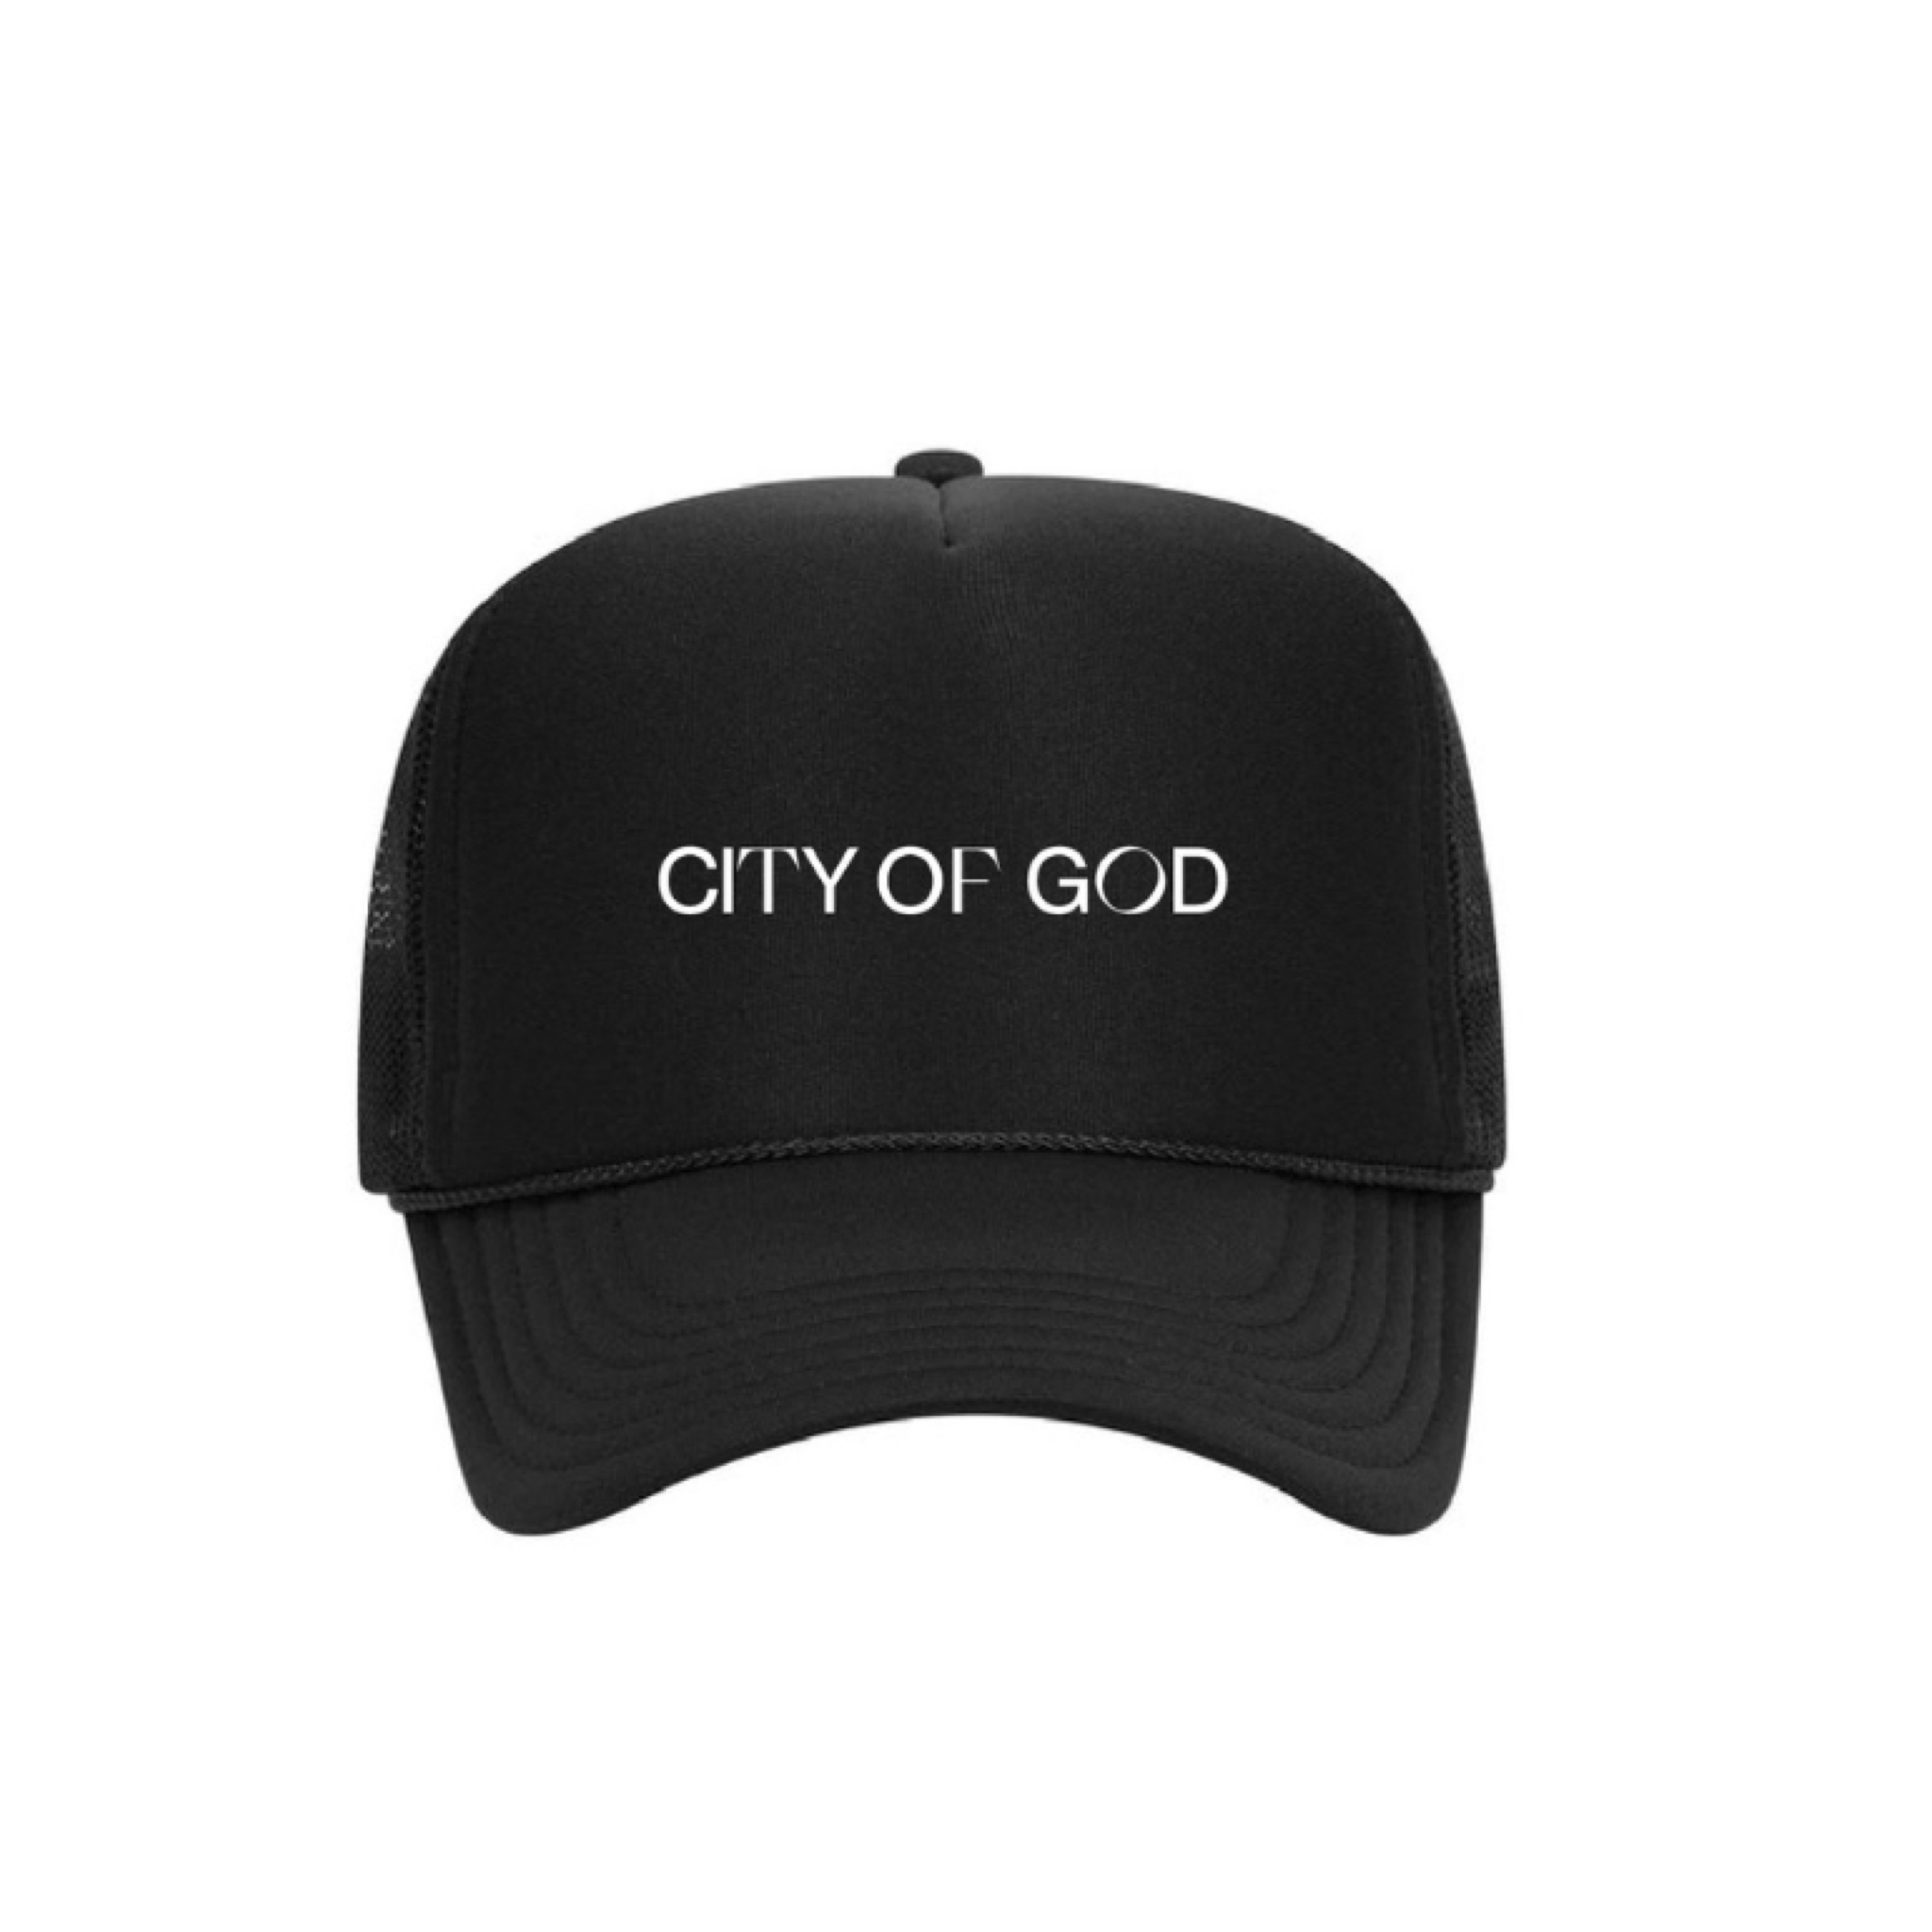 CITY OF GOD - TRUCKER HAT